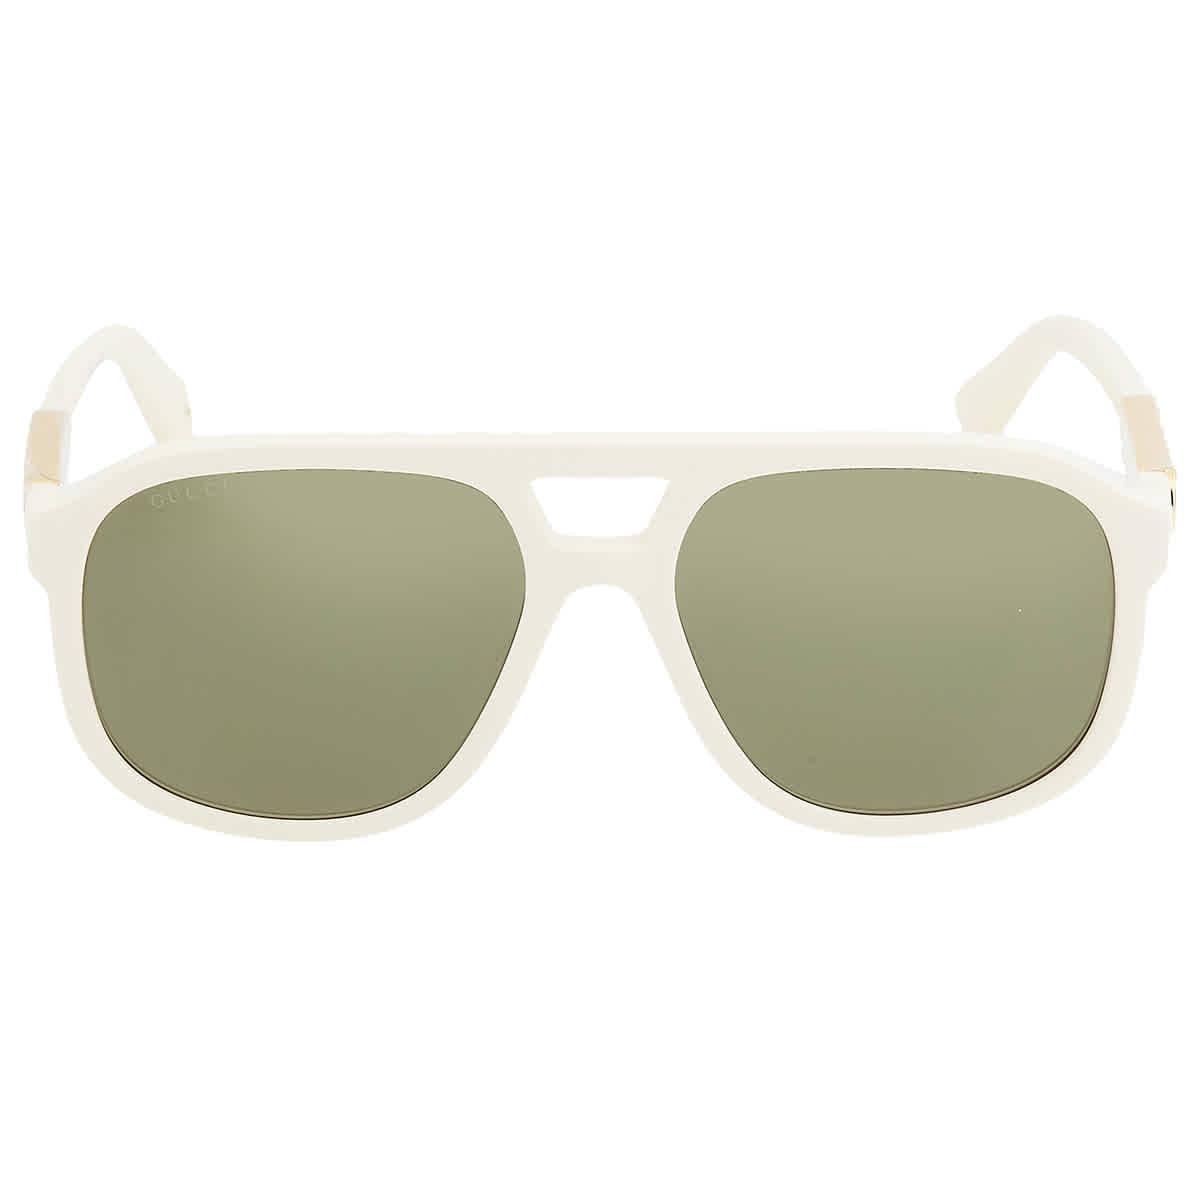 David Beckham Eyewear 59mm Aviator Sunglasses Product Image